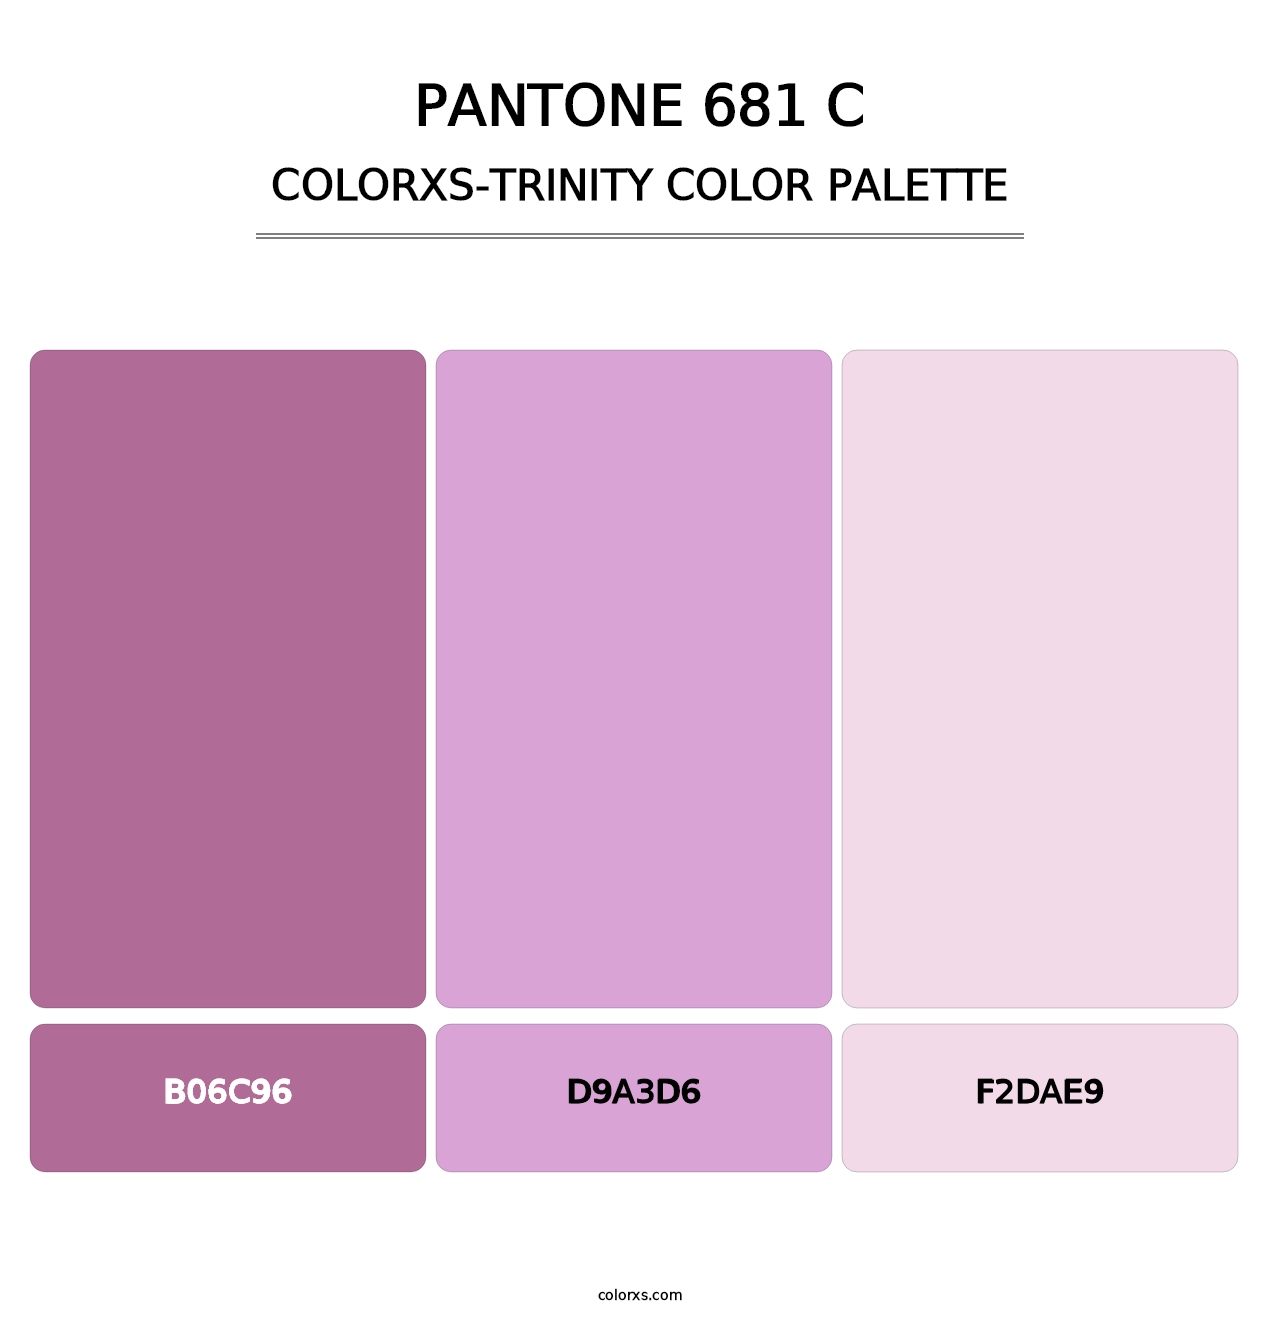 PANTONE 681 C - Colorxs Trinity Palette